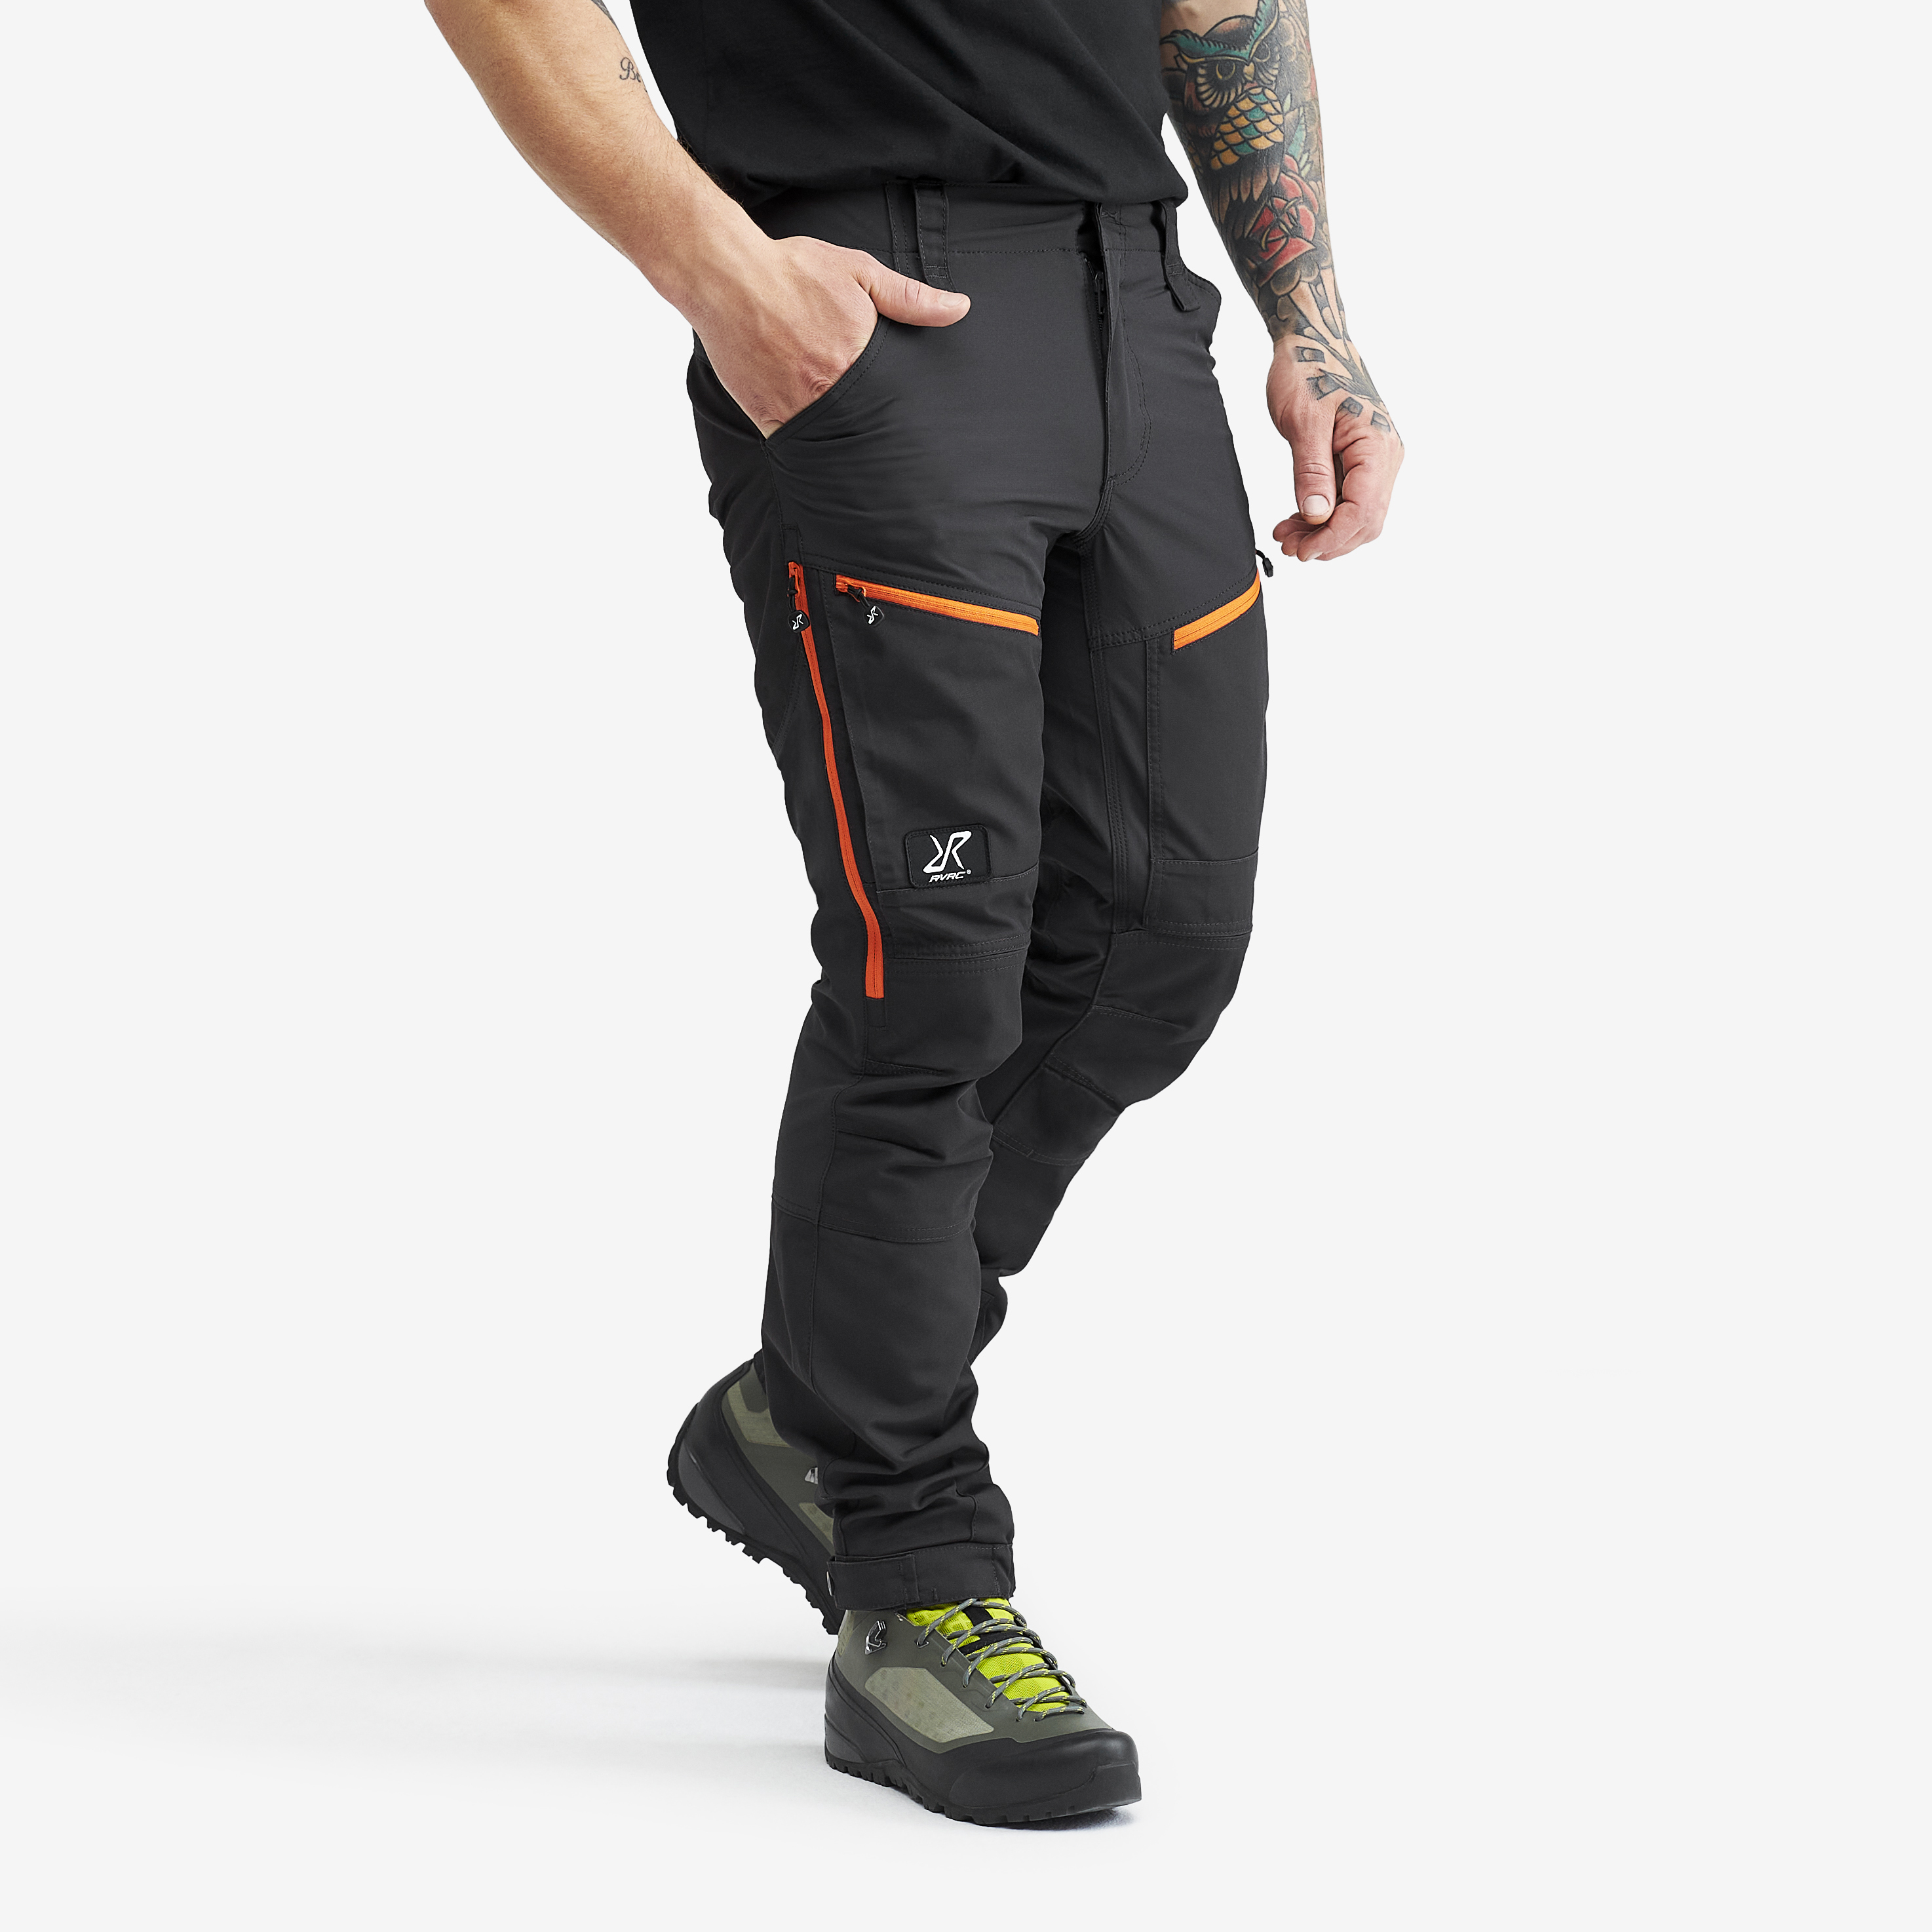 RVRC GP Pro Short Pants Grey/Orange